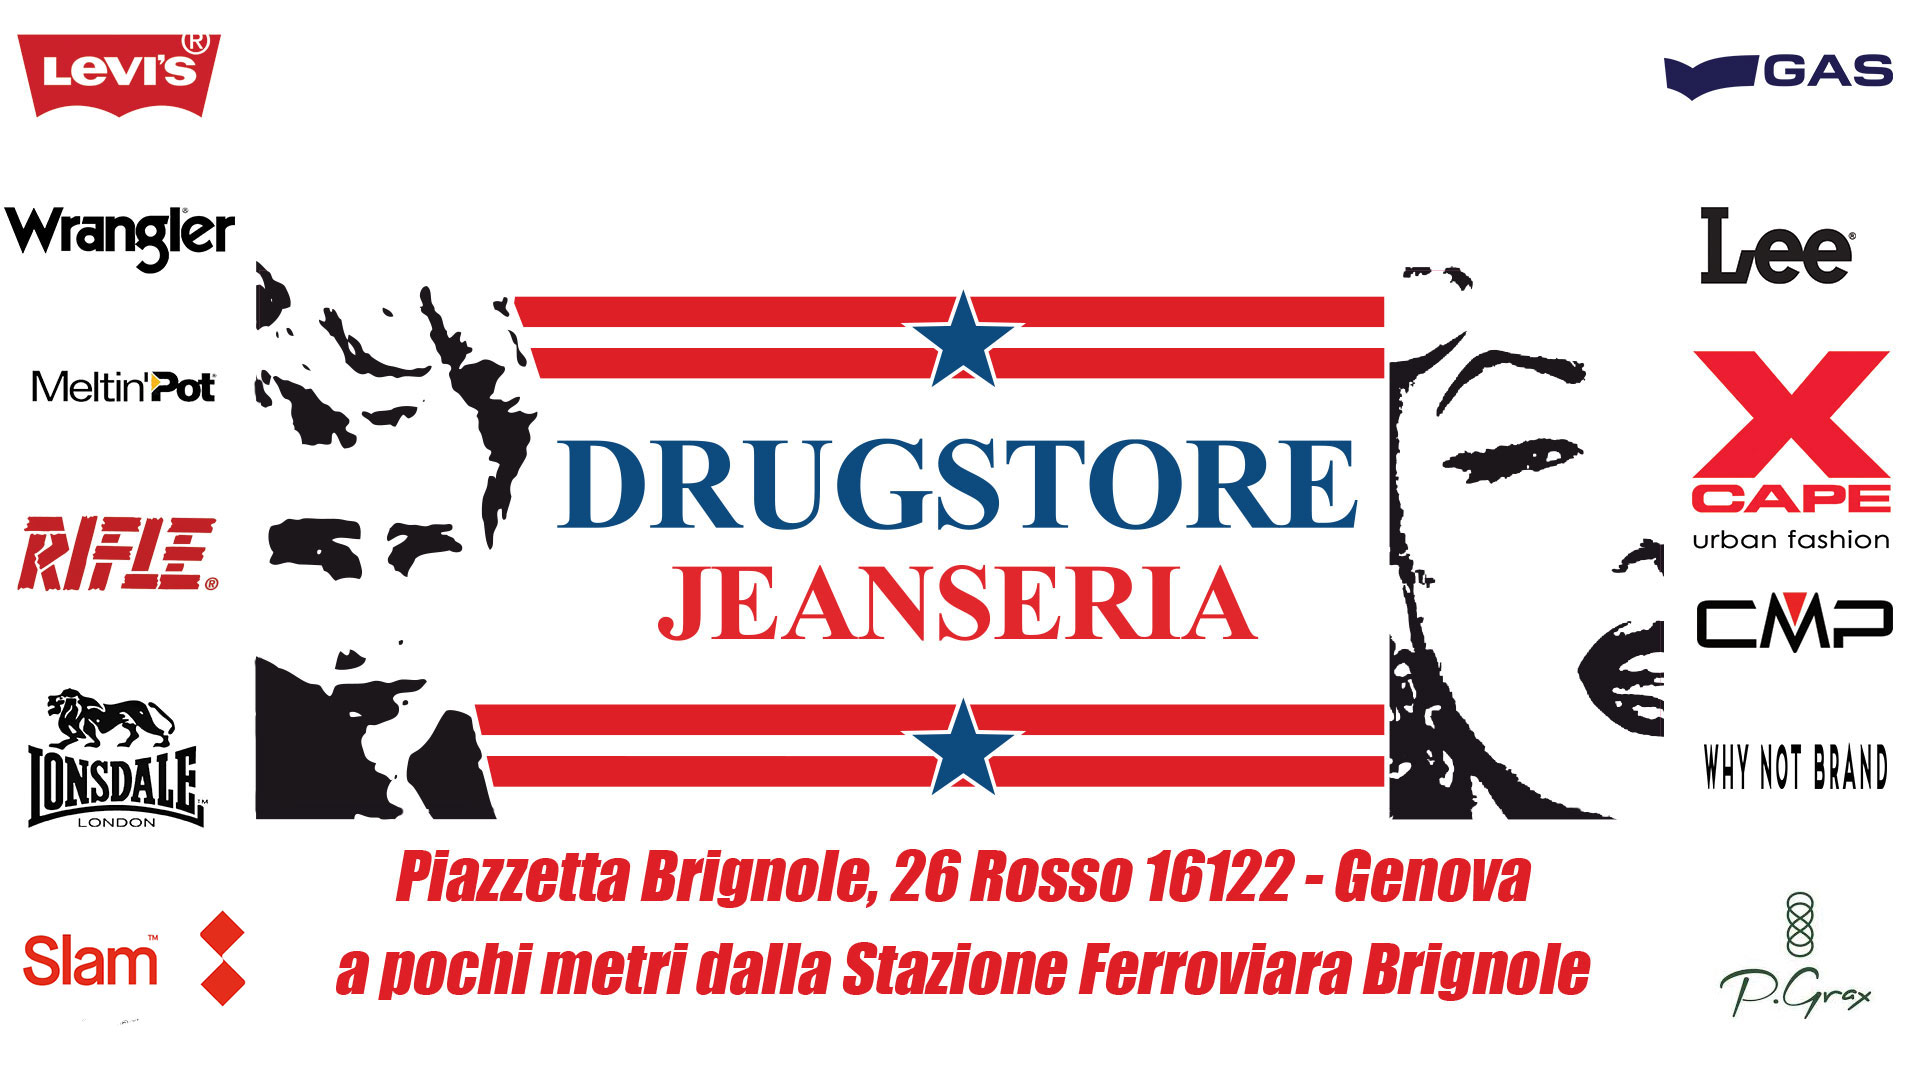 Jenseria Drugstore - Genova